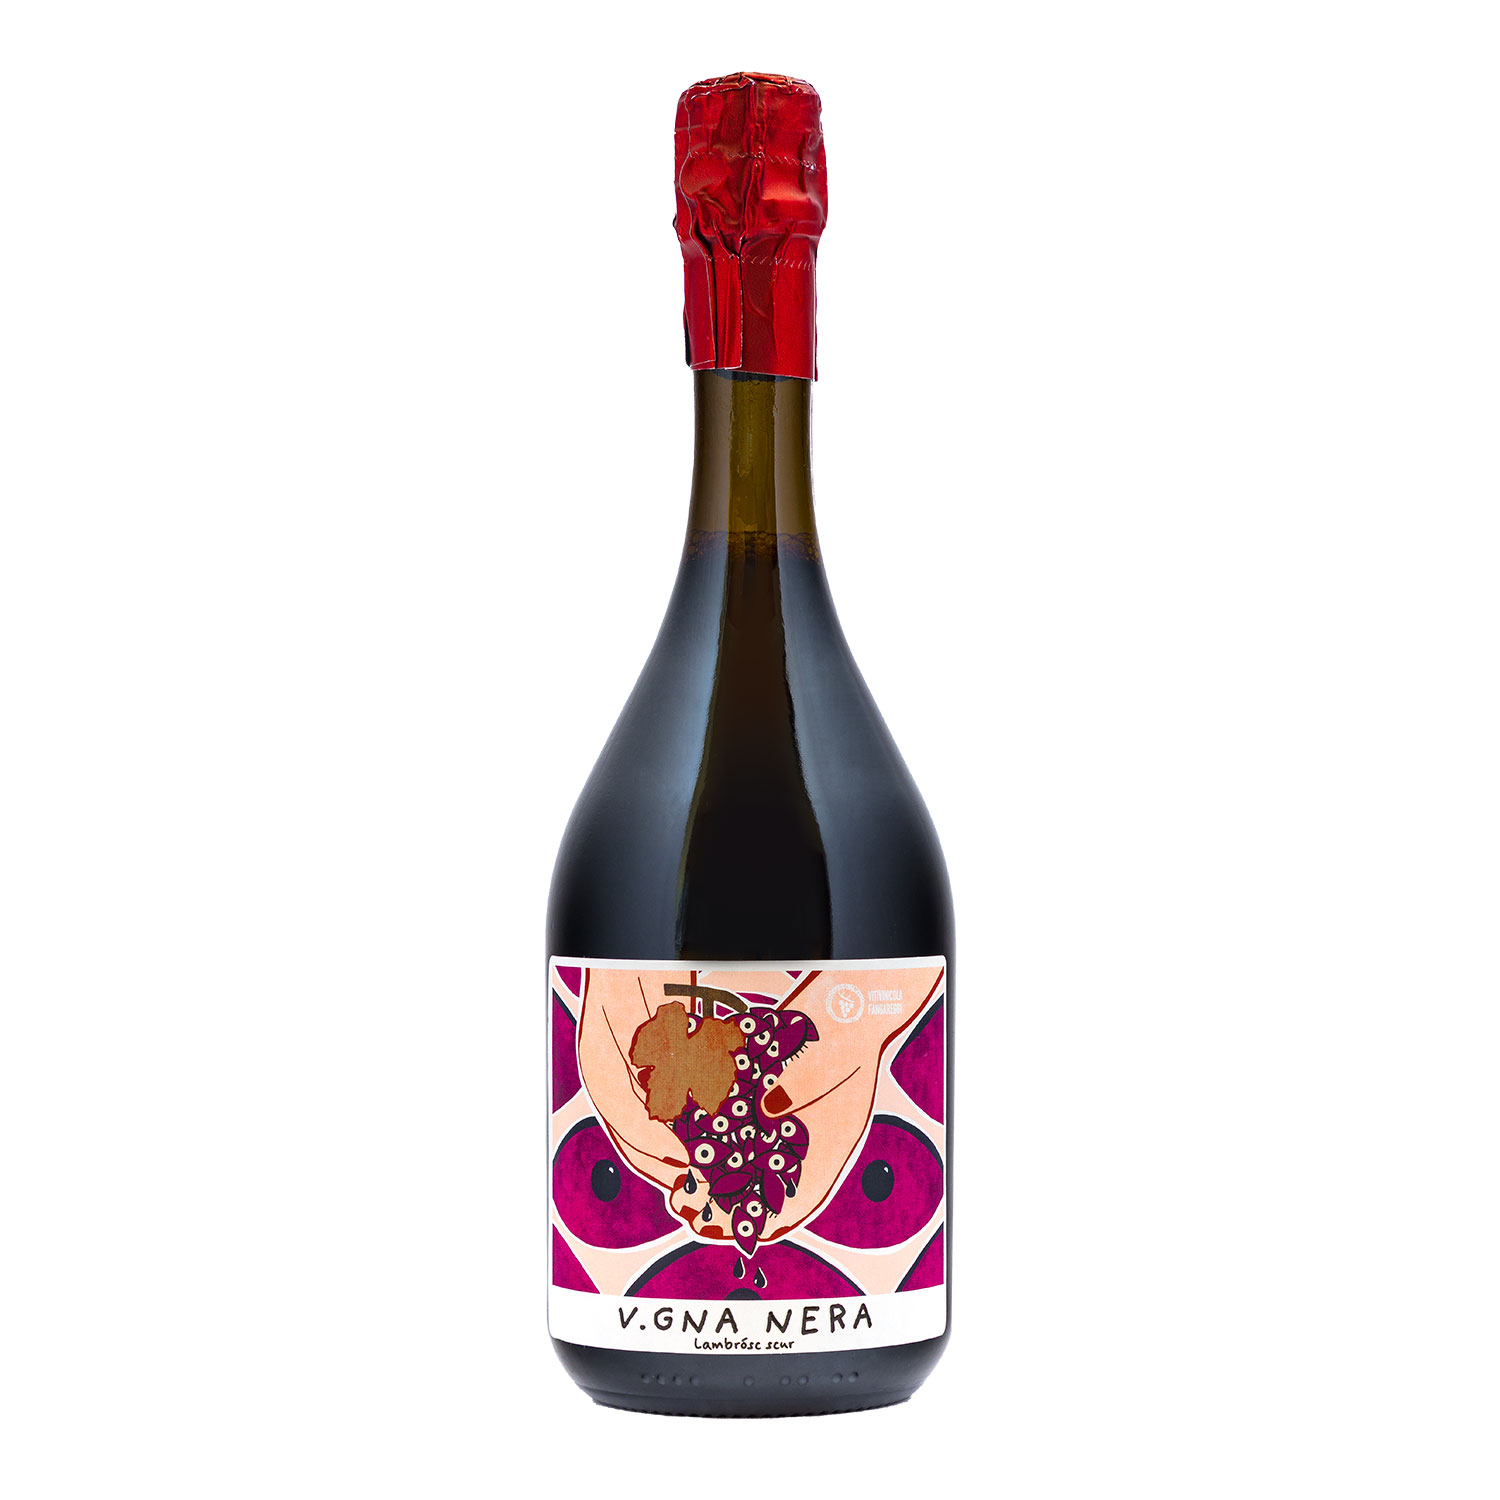 Emilia Lambrusco Rosso IGP “Vigna Nera” - Vitivinicola Fangareggi, Your Wine 